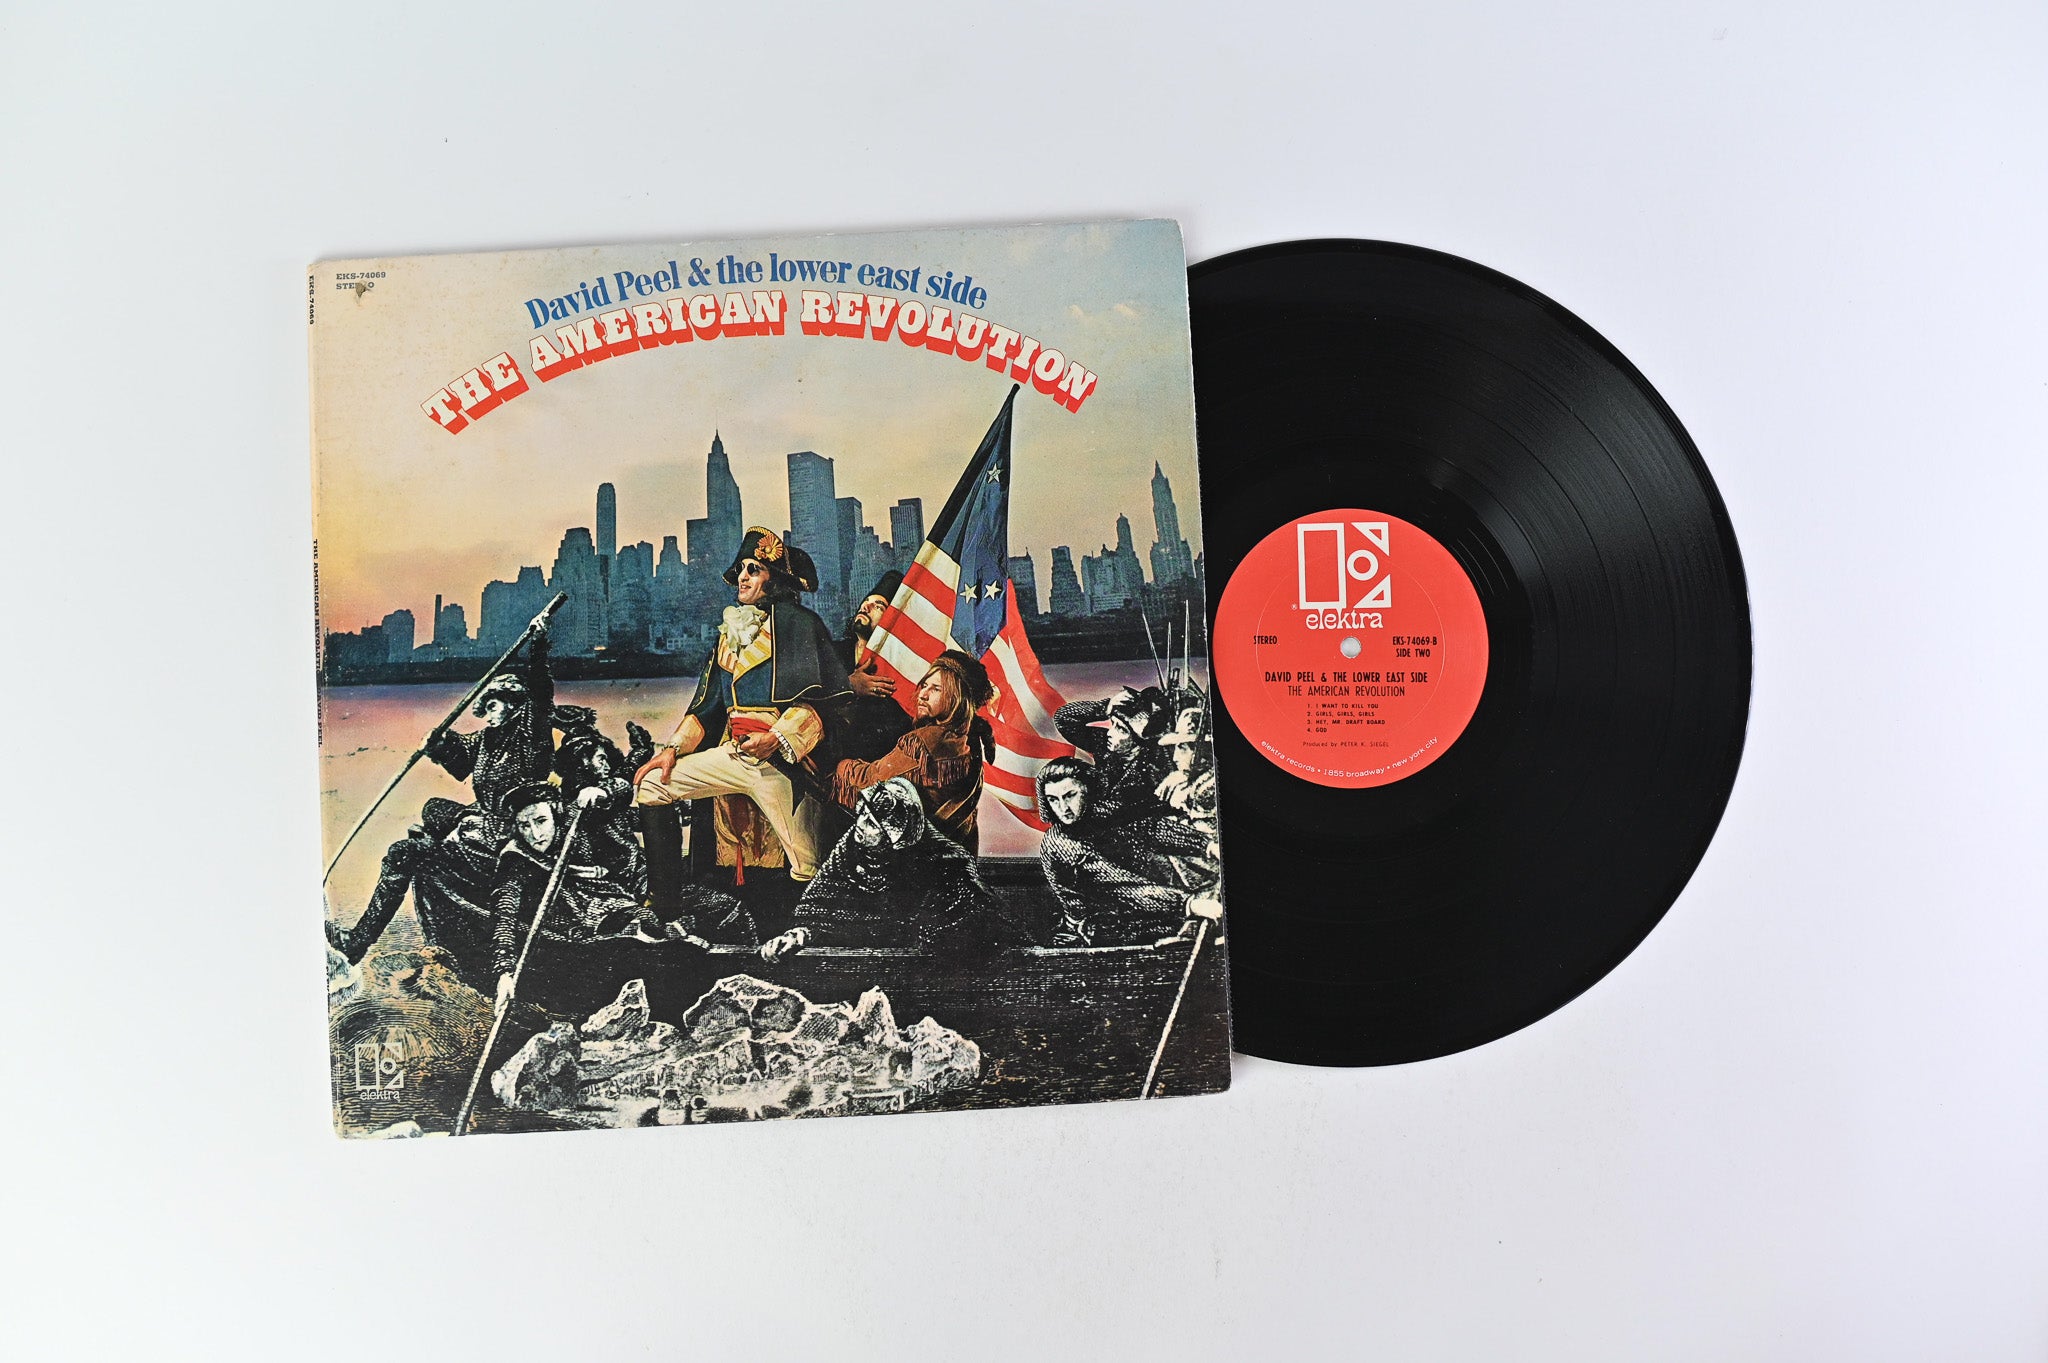 David Peel & The Lower East Side – The American Revolution on Elektra